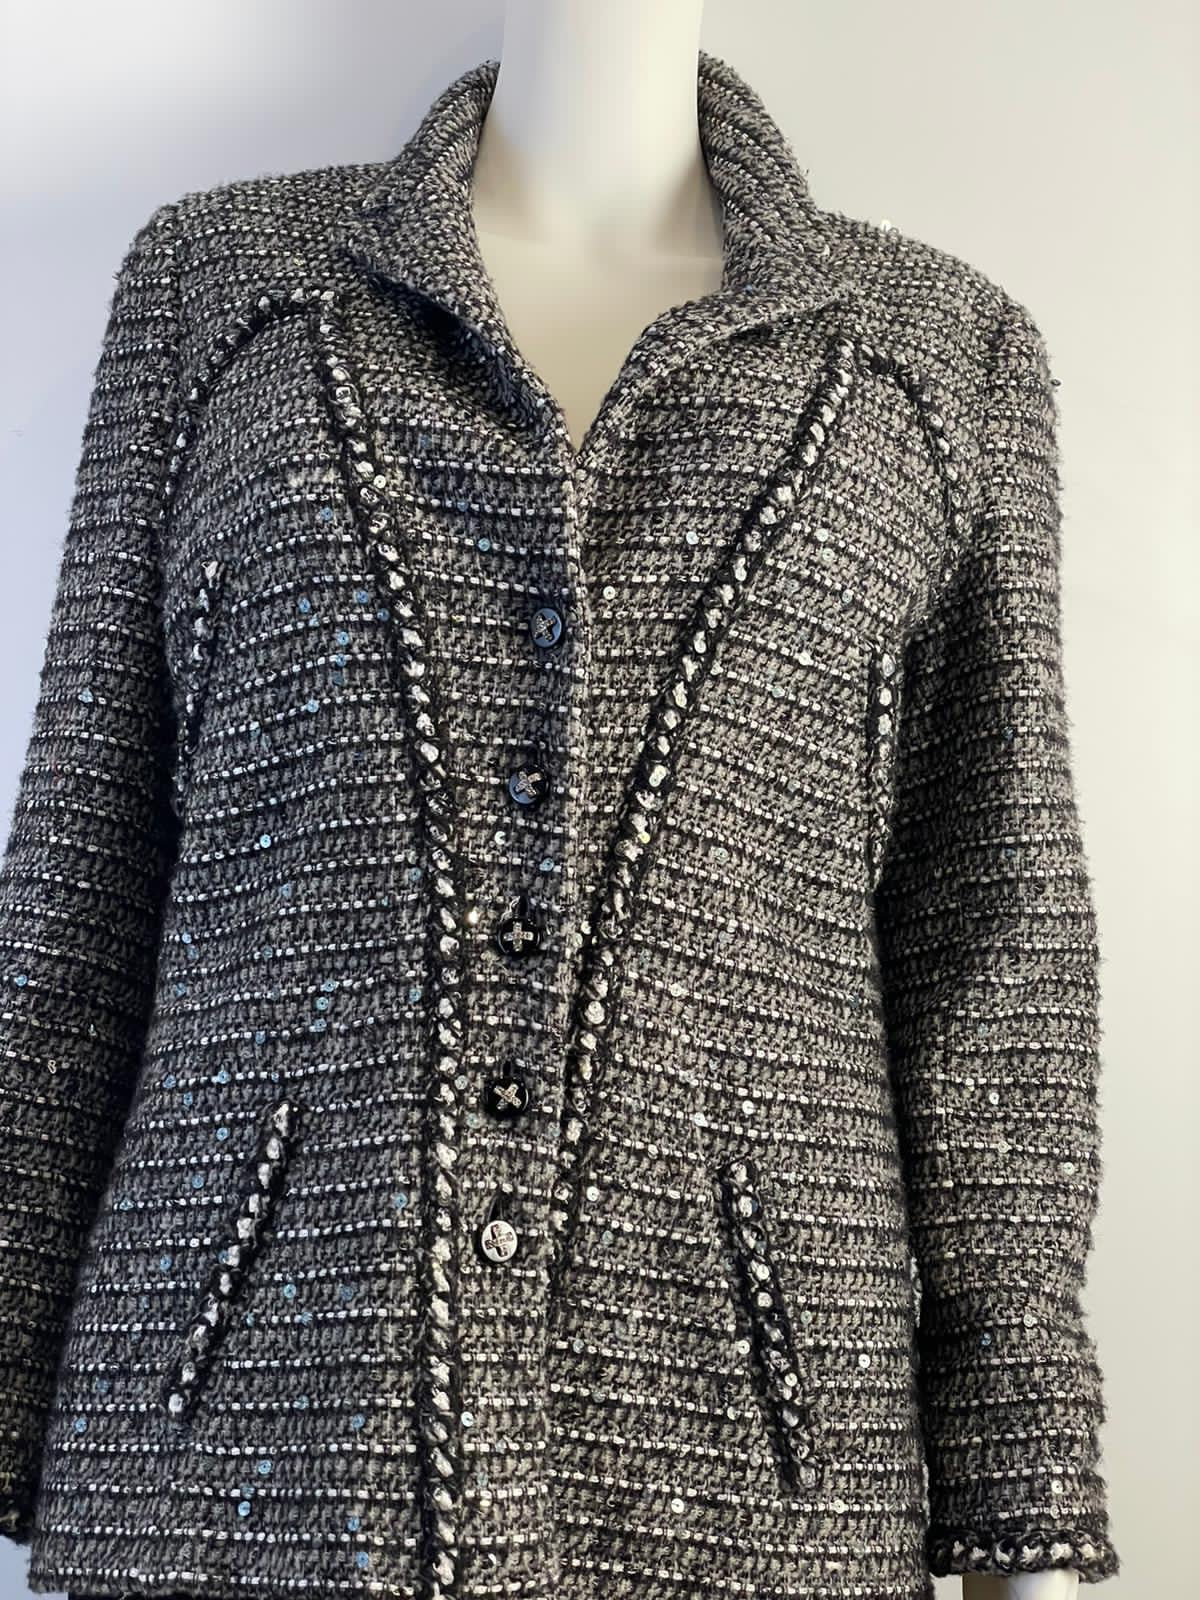 chanel tweed jacket 36